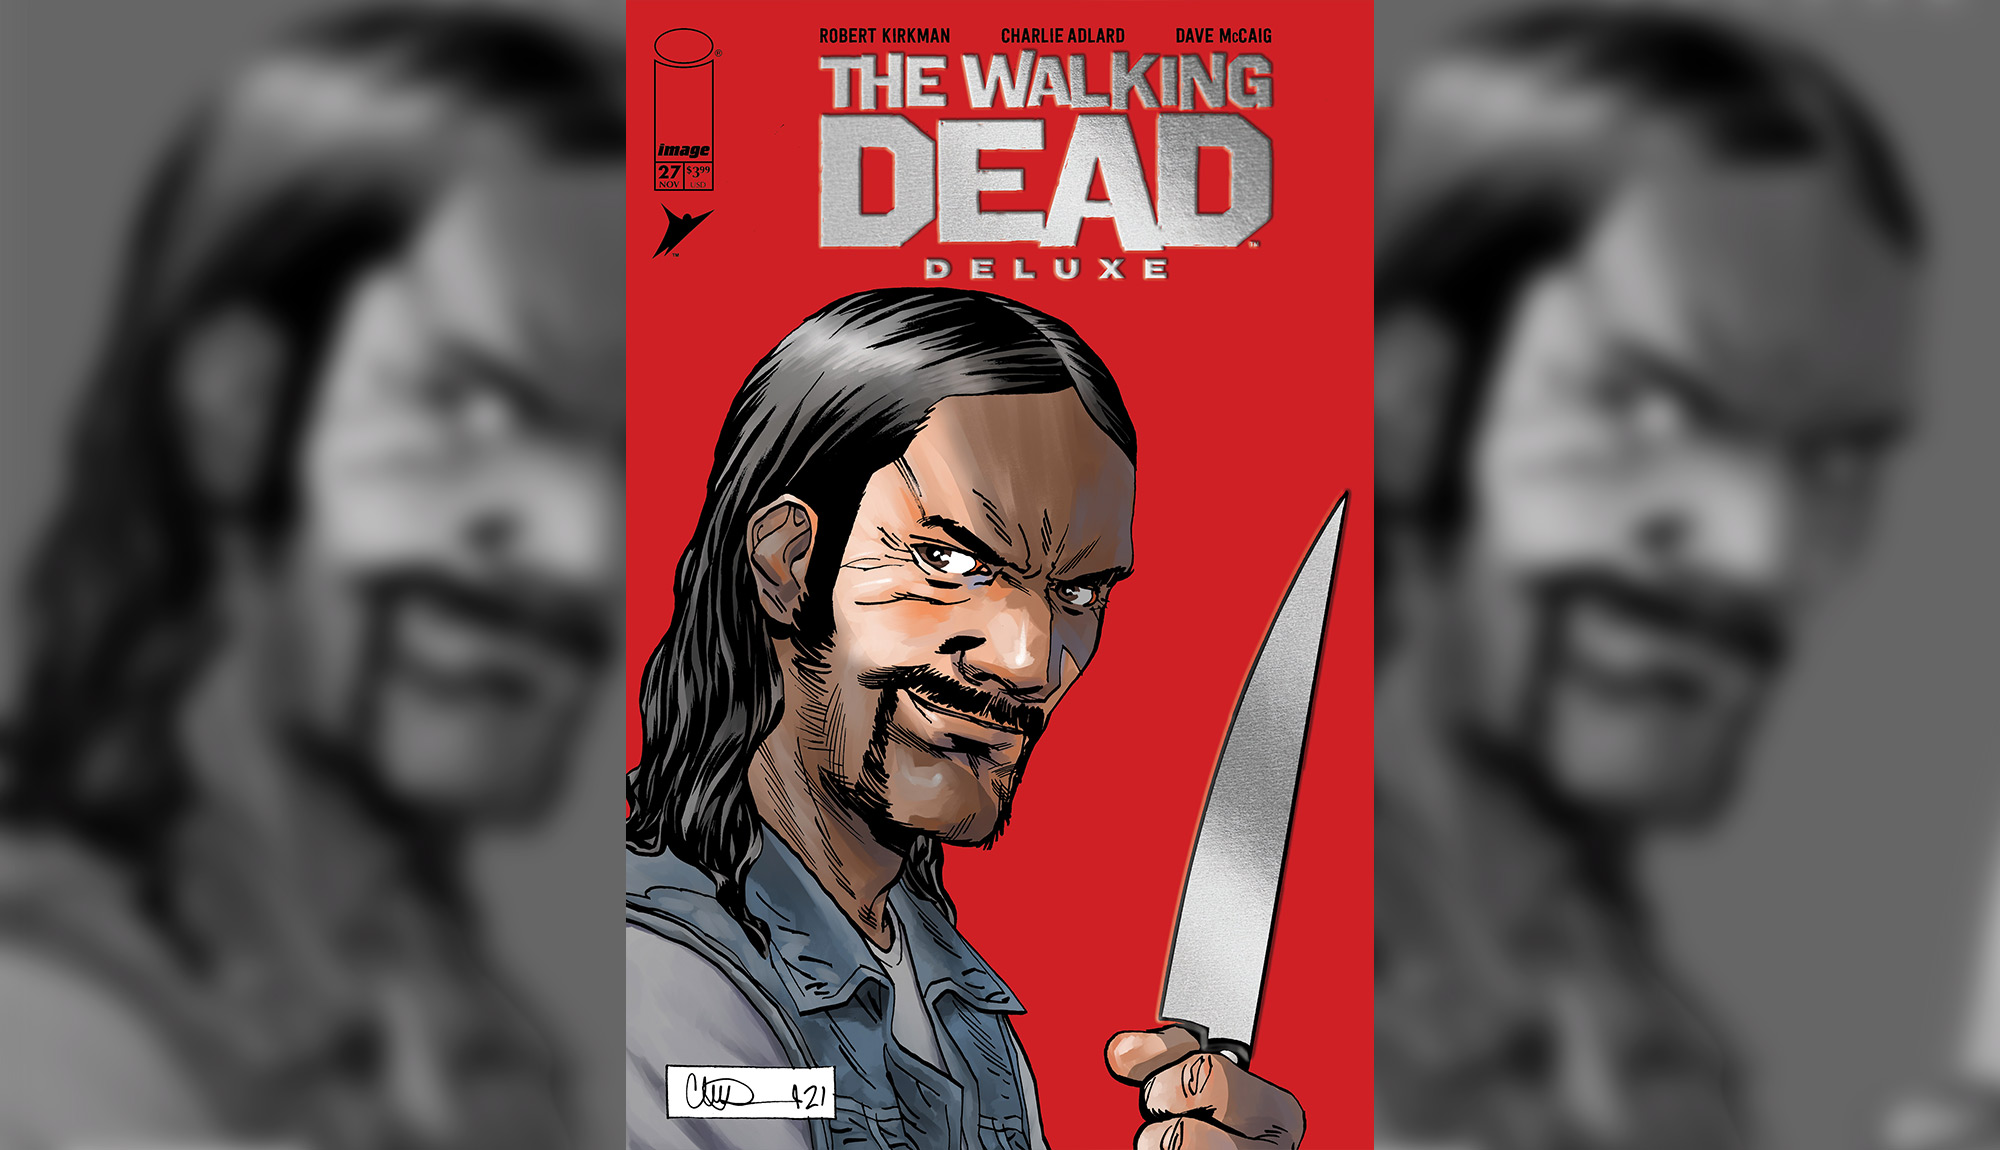 The Walking Dead Deluxe #27 Cover Art